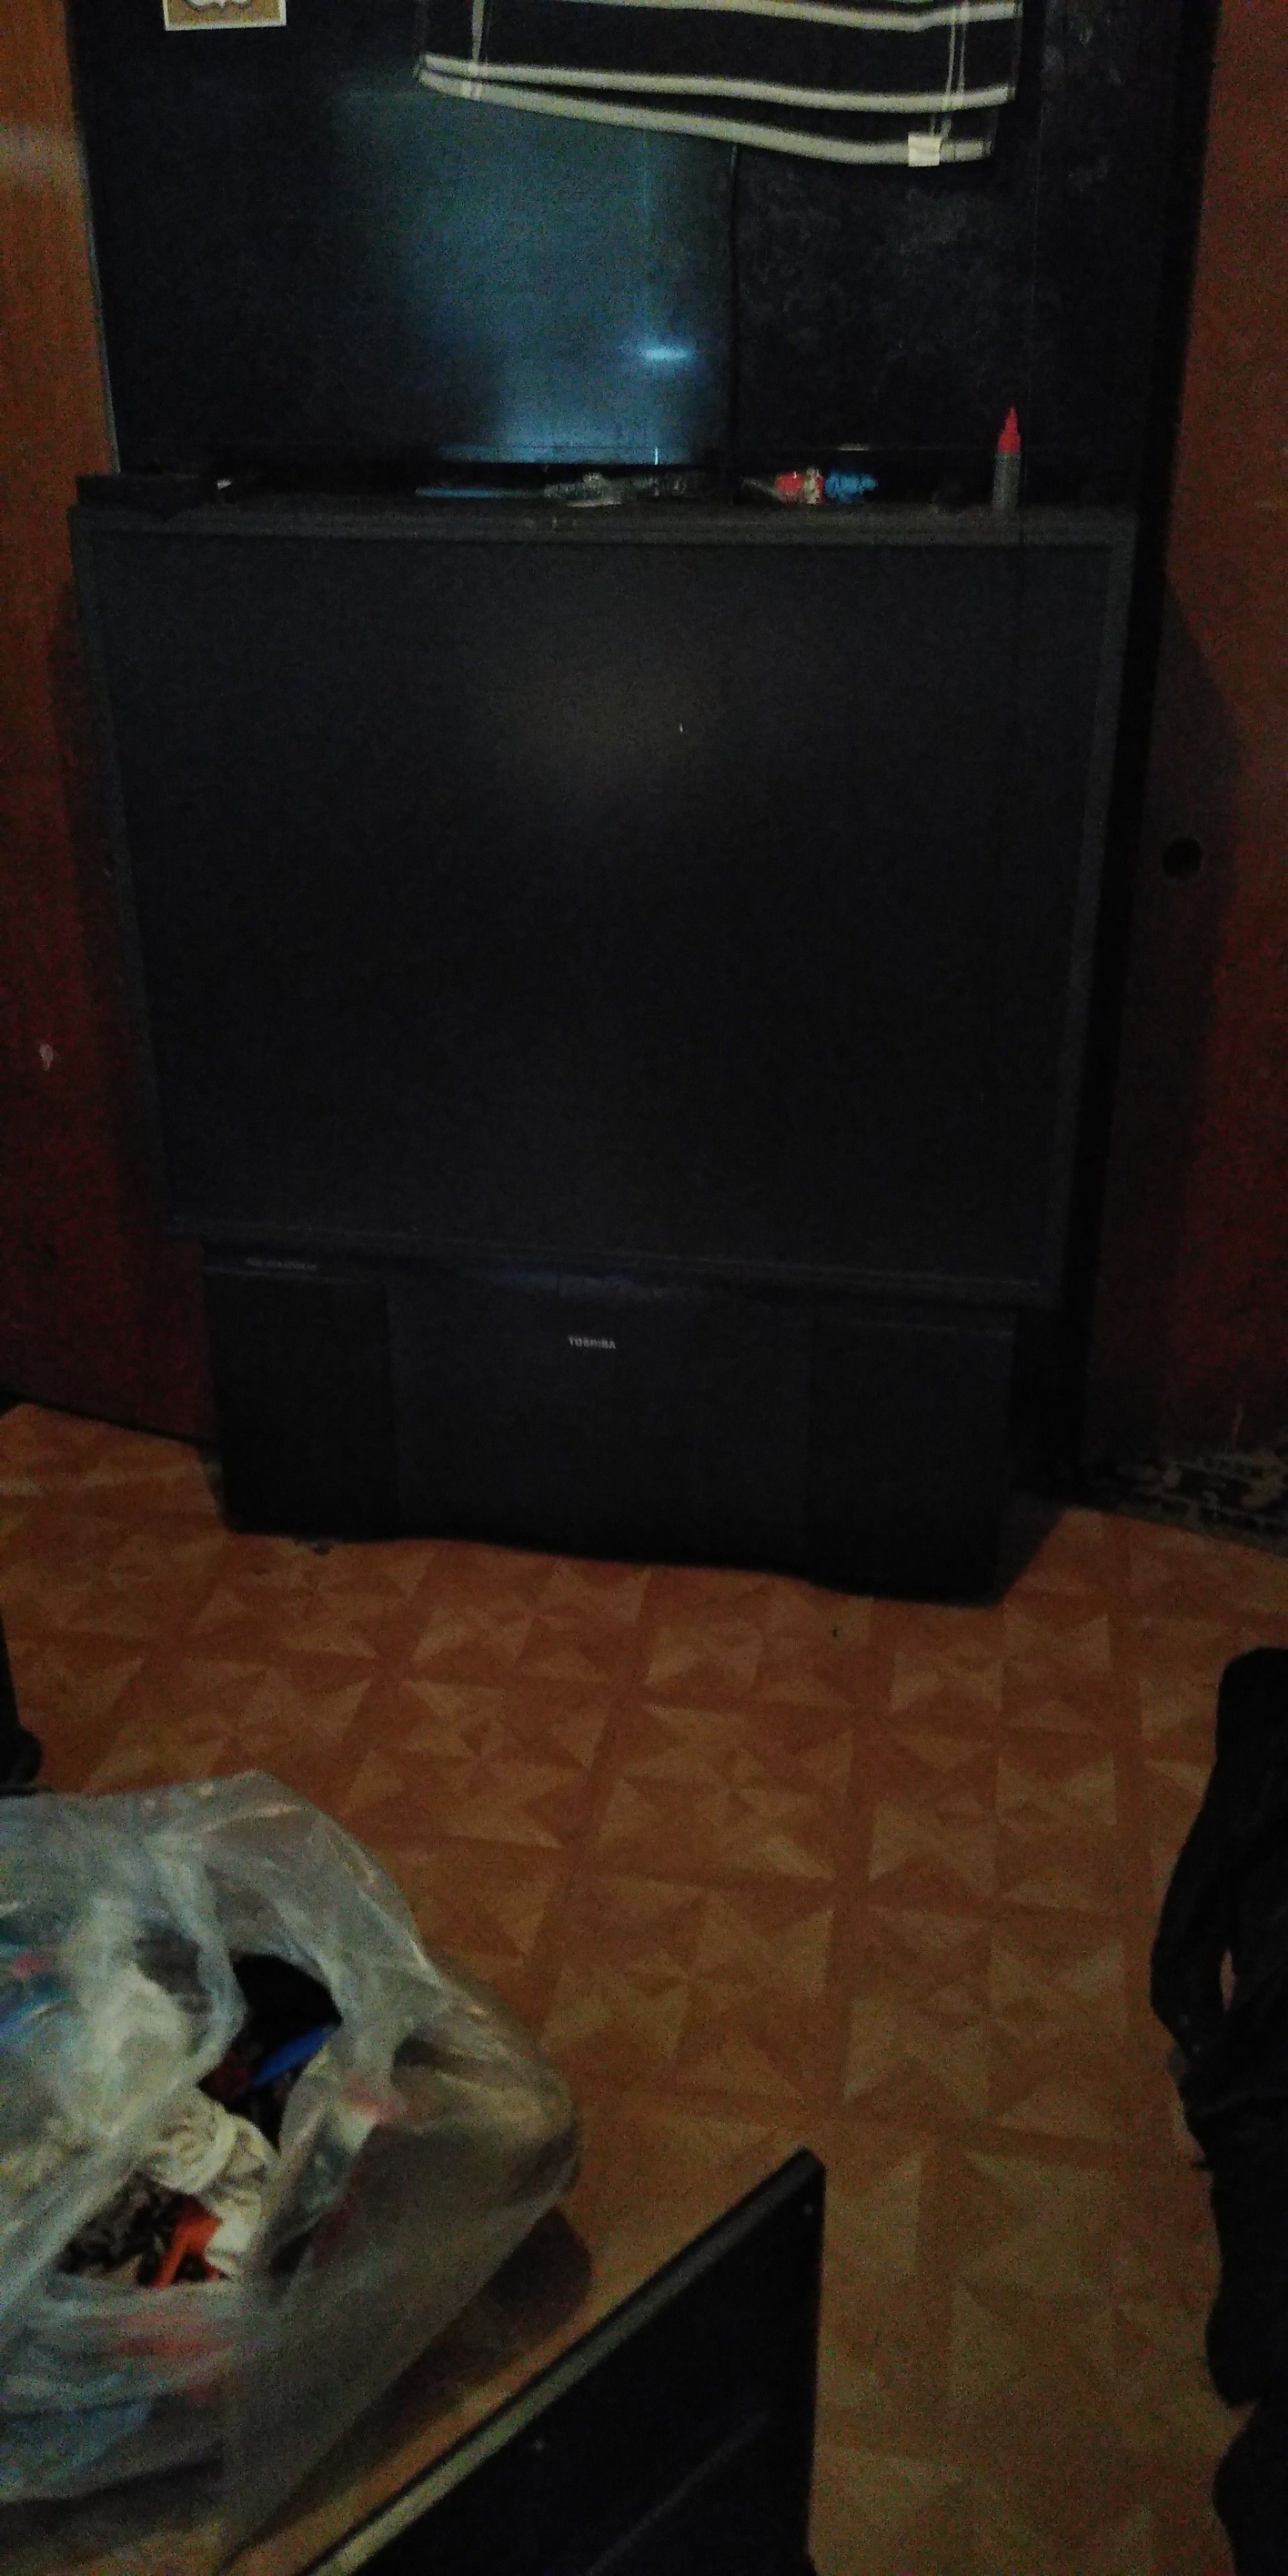 Toshiba 58inch flat screen floor model TV